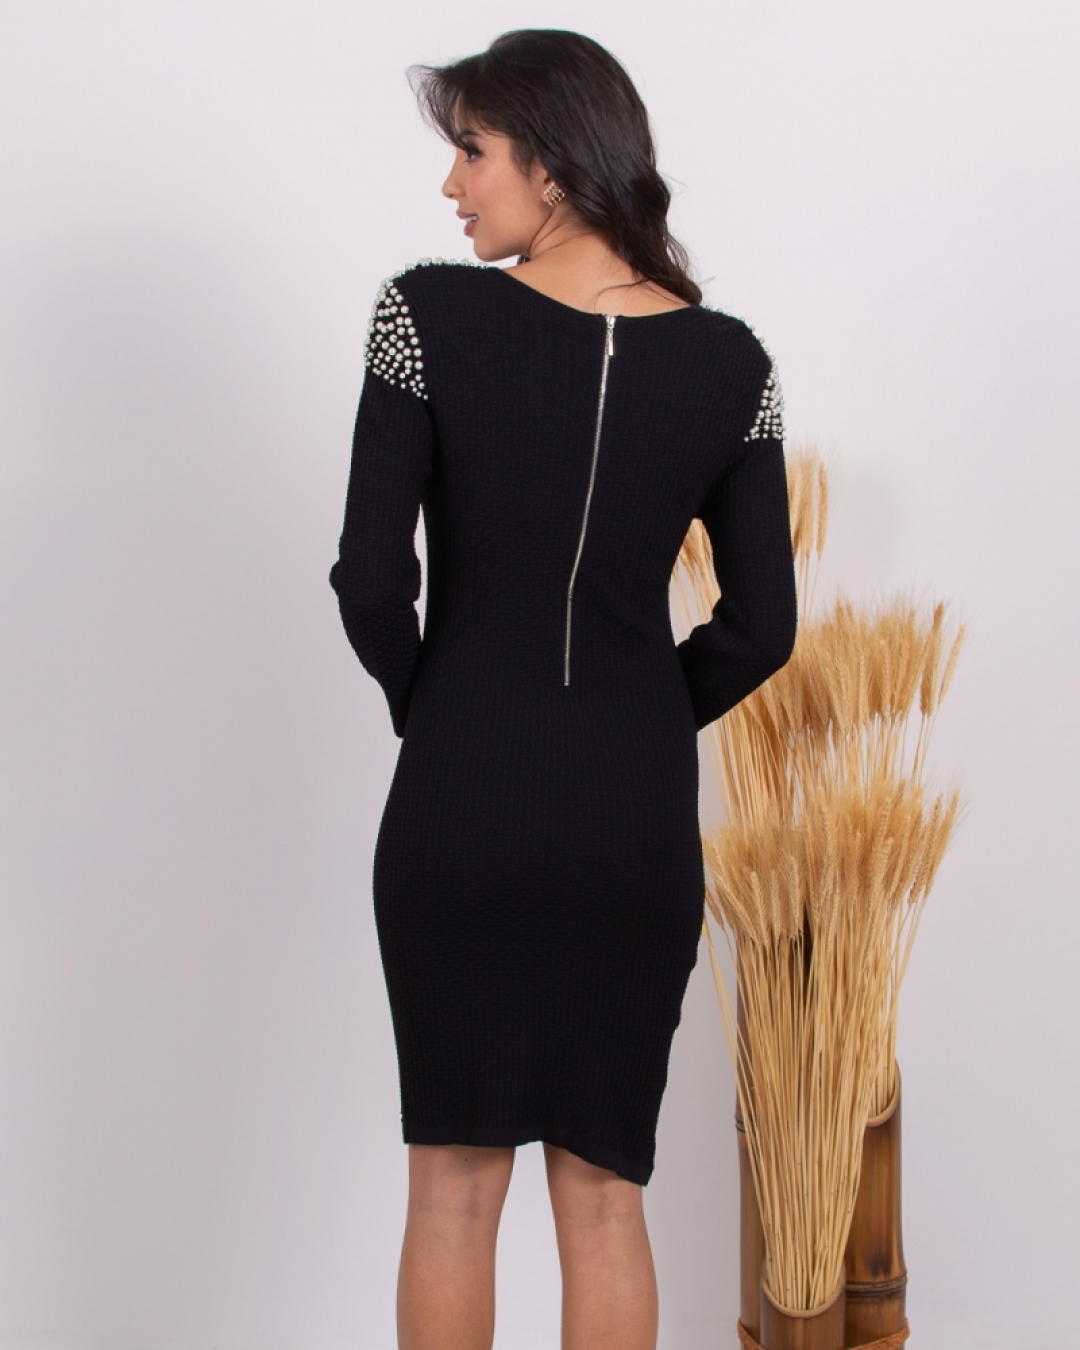 Miss Misses - Misses Dress with Black Needlework - 10006366